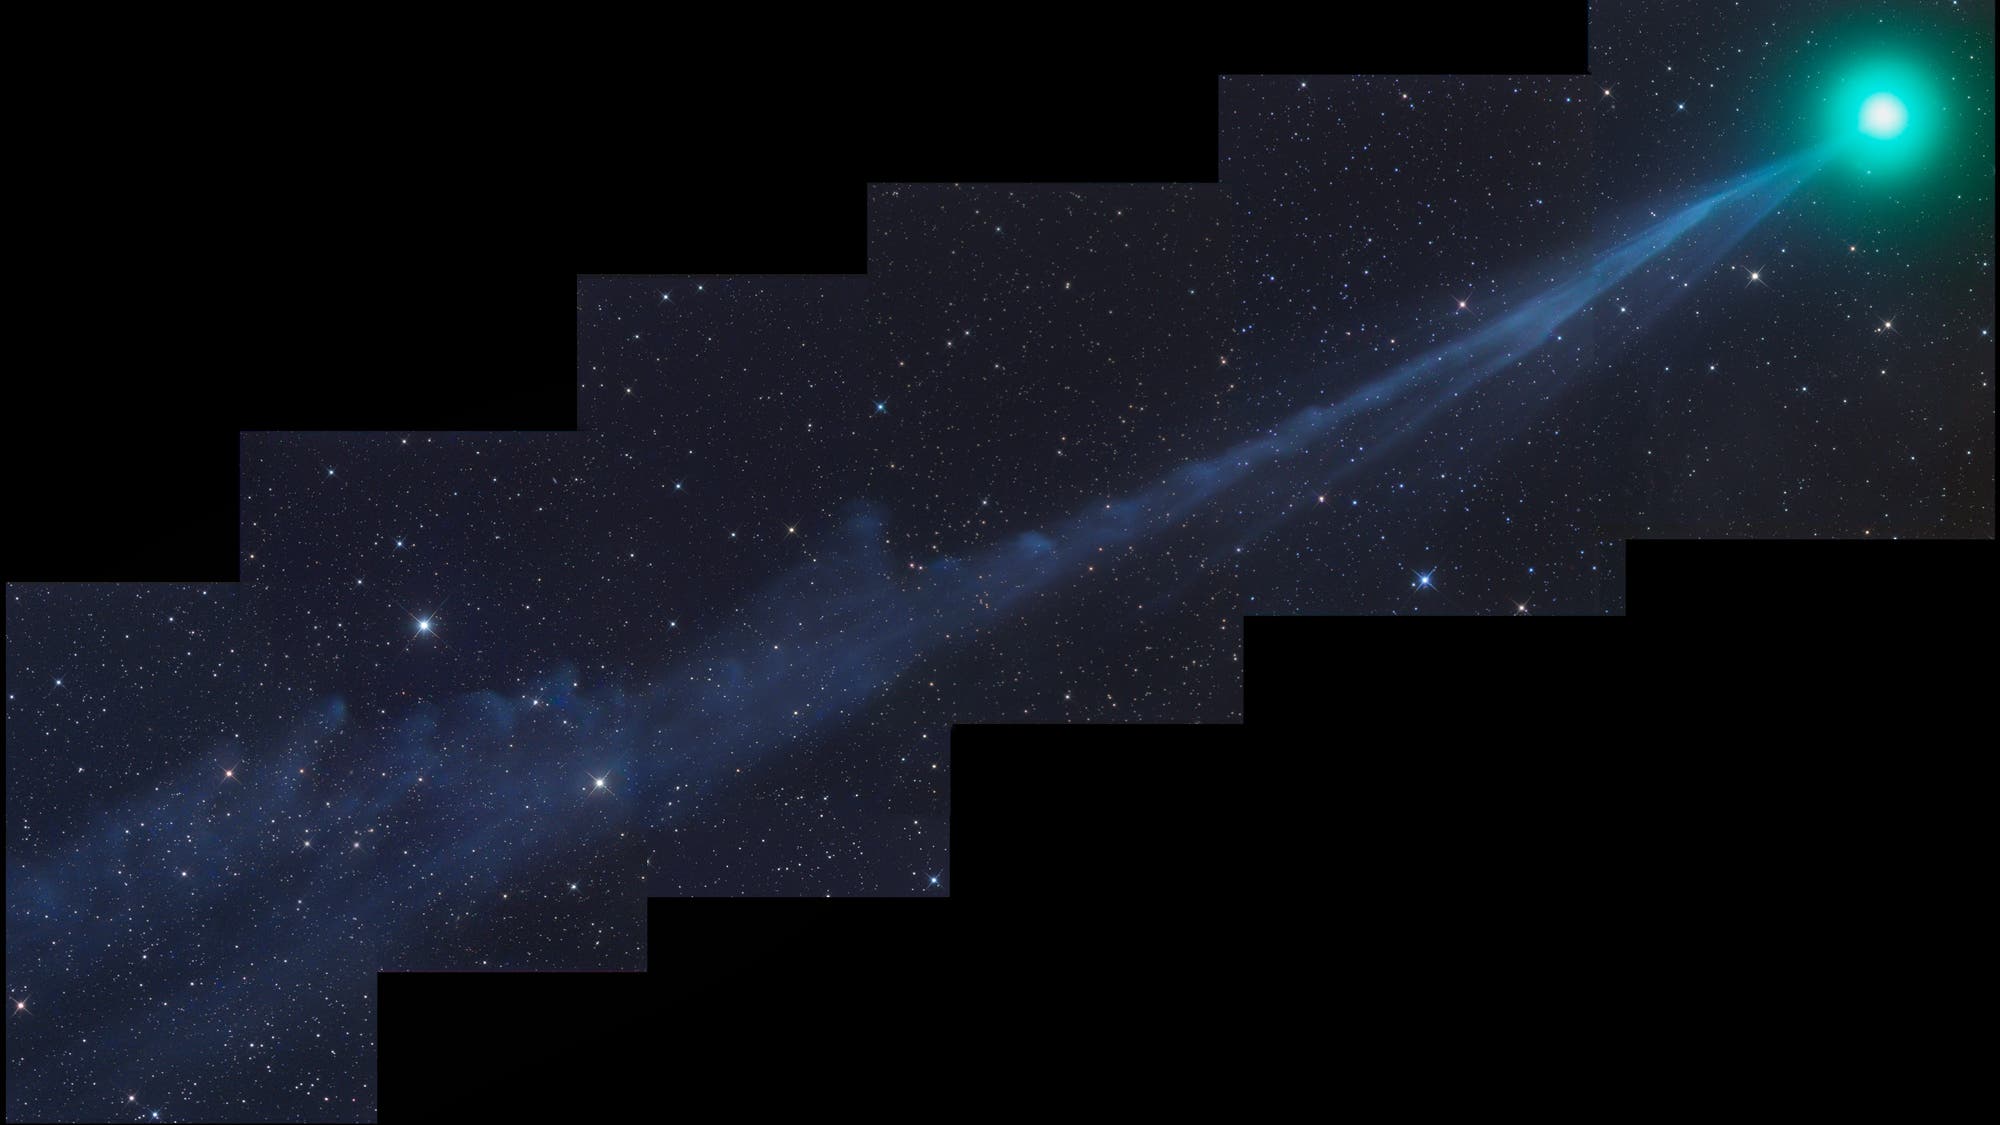 Komet C/2014Q2 Lovejoy